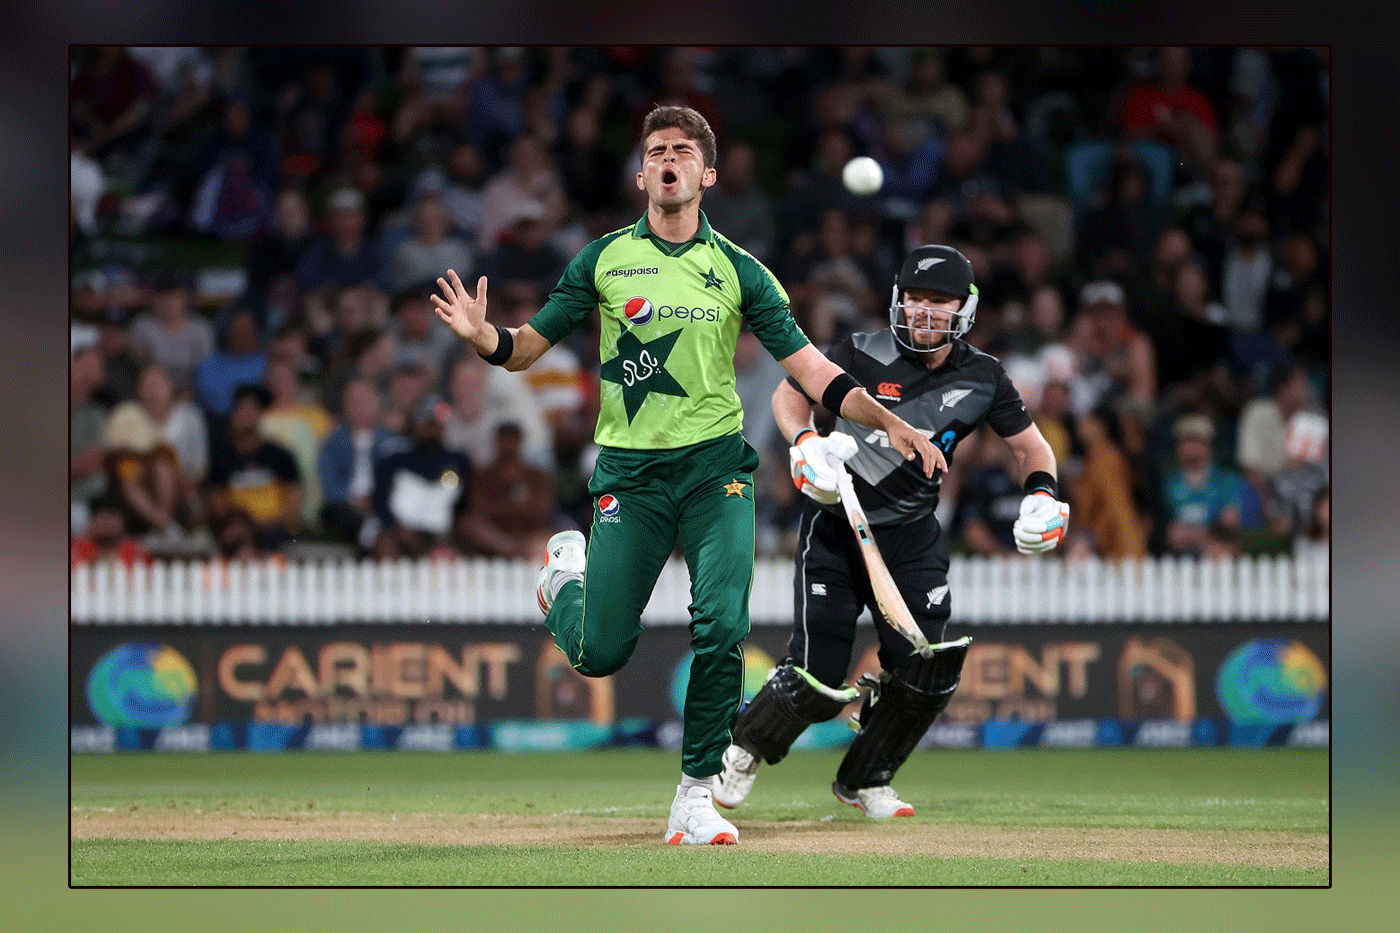 Third T20: Pakistan won the toss, invited New Zealand to bat